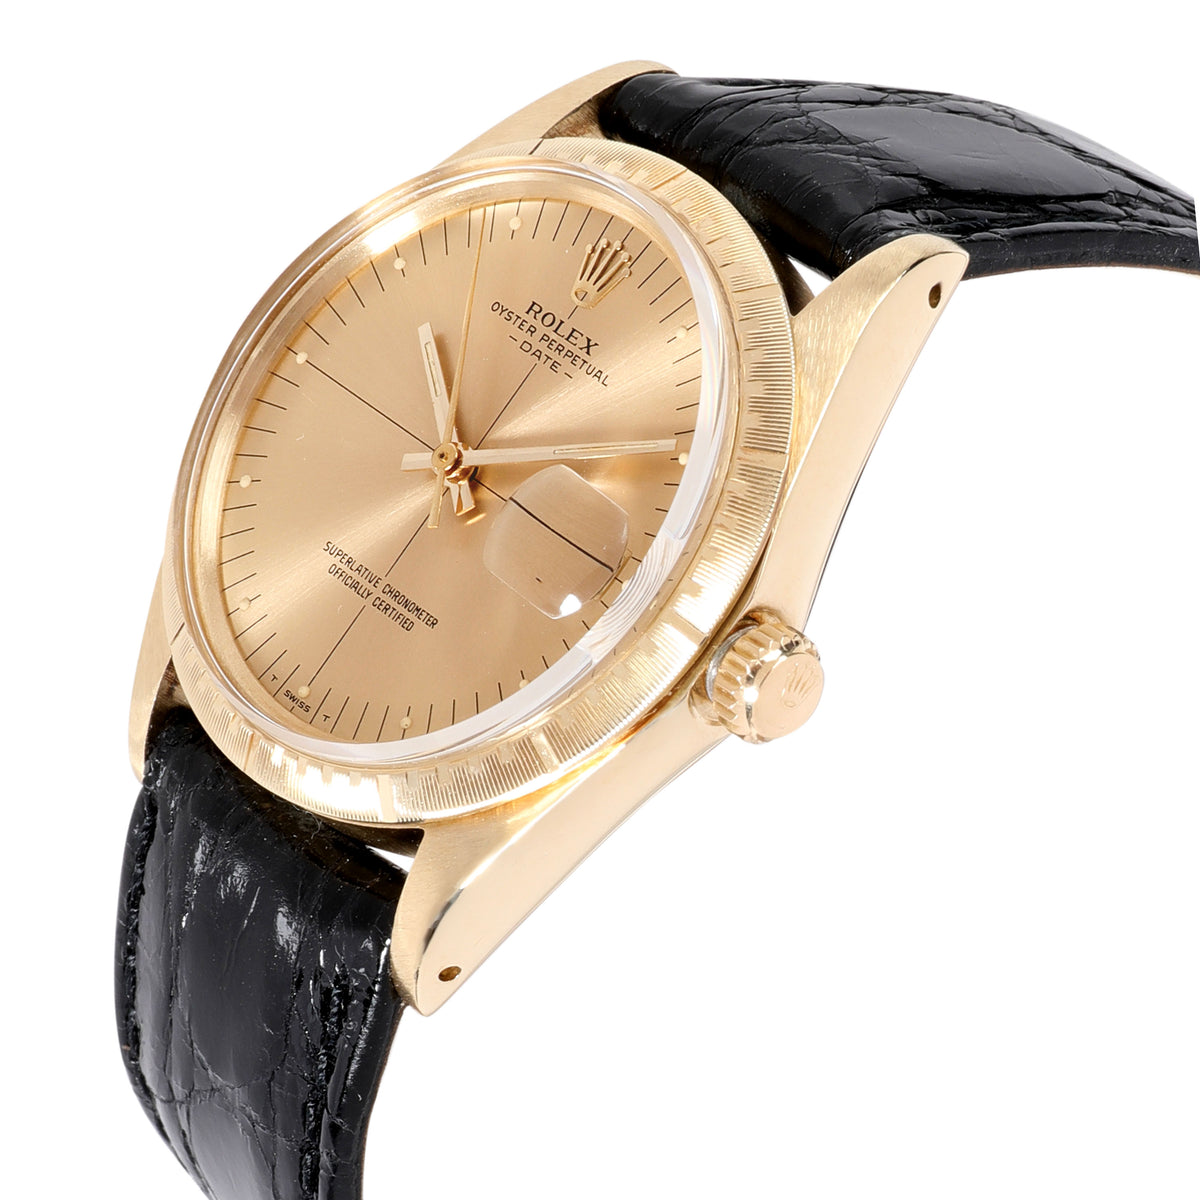 Rolex Date 1512 Men's Watch in 14kt Yellow Gold